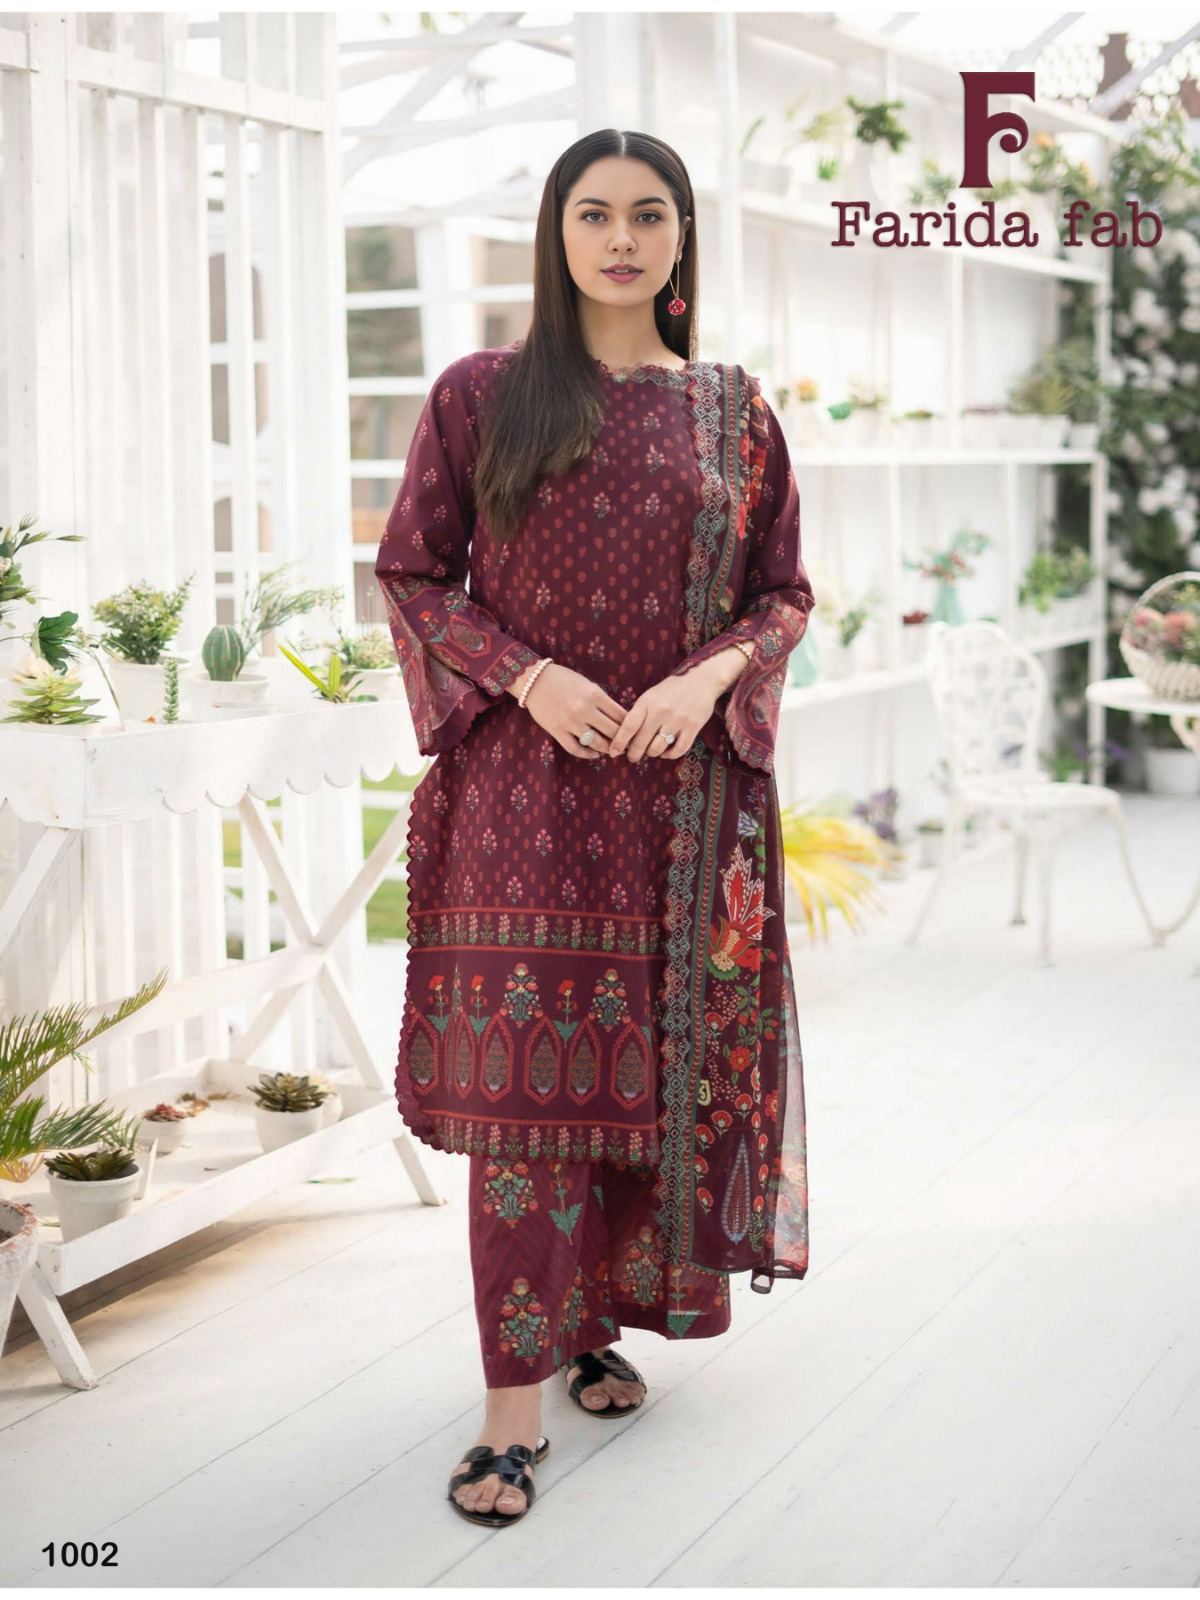 Farida Fab Spring Summer Wholesale Pure Cotton Printed Dress Material